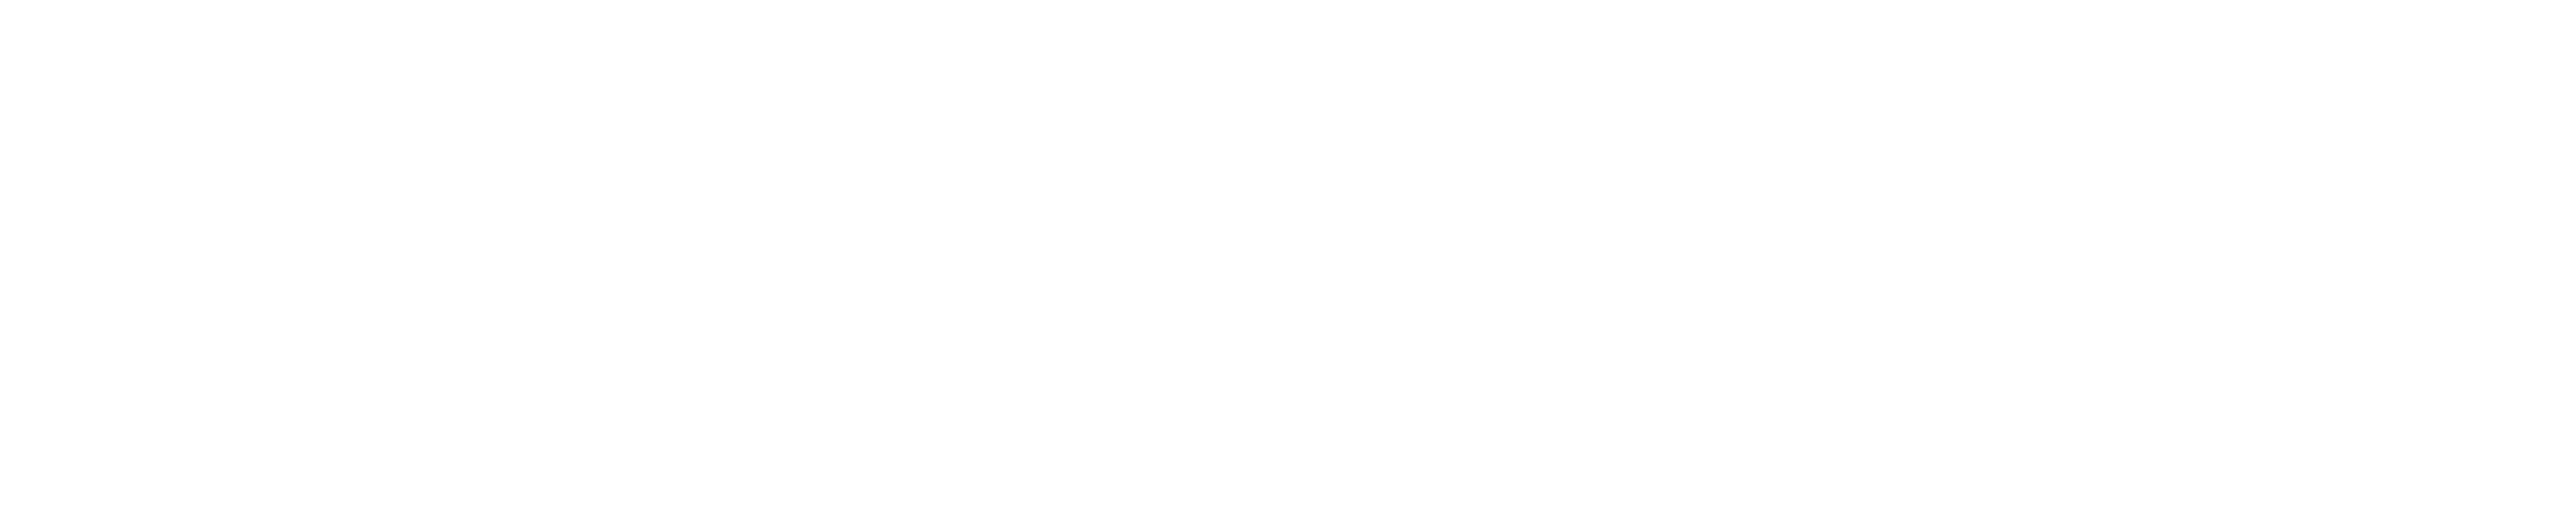 Carlisle Logo - About Us - Carlisle Spray Foam Insulation